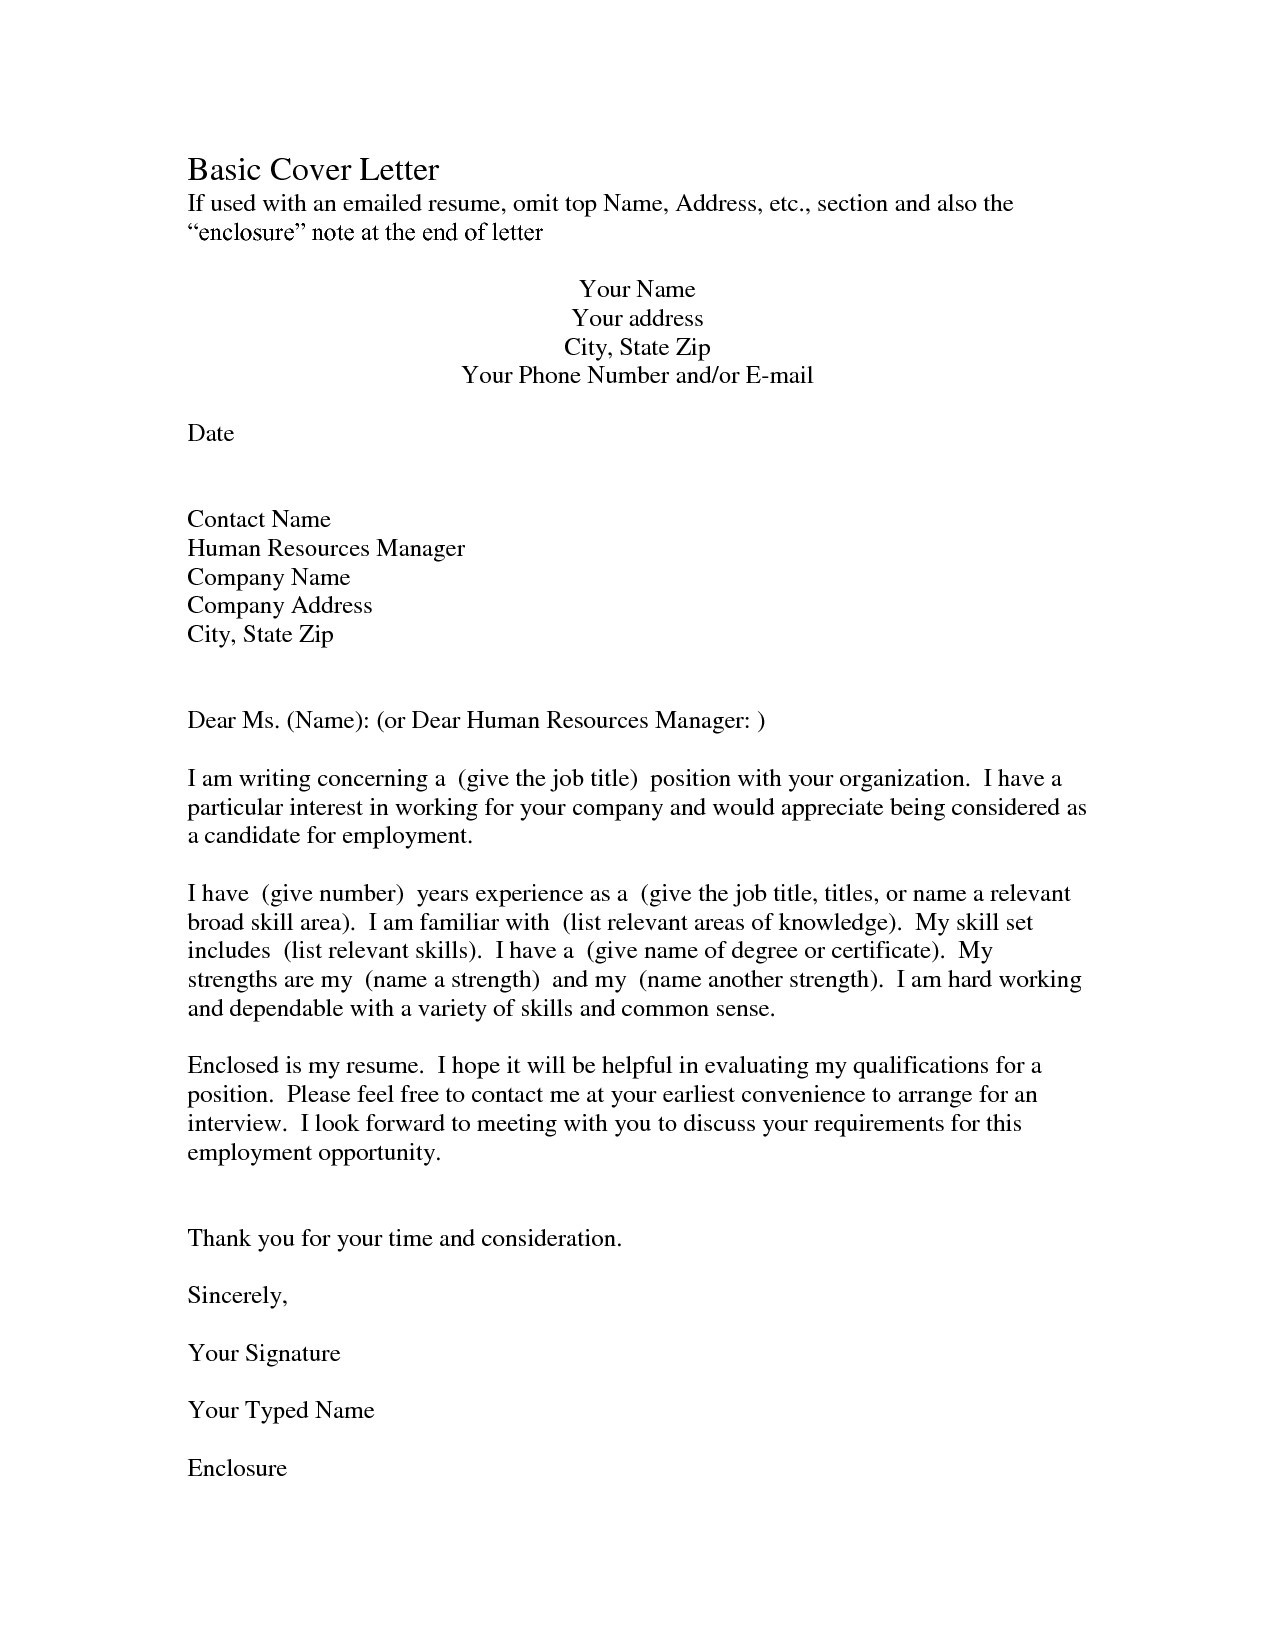 Hr Letter Template - Free Resume Cover Letter format S